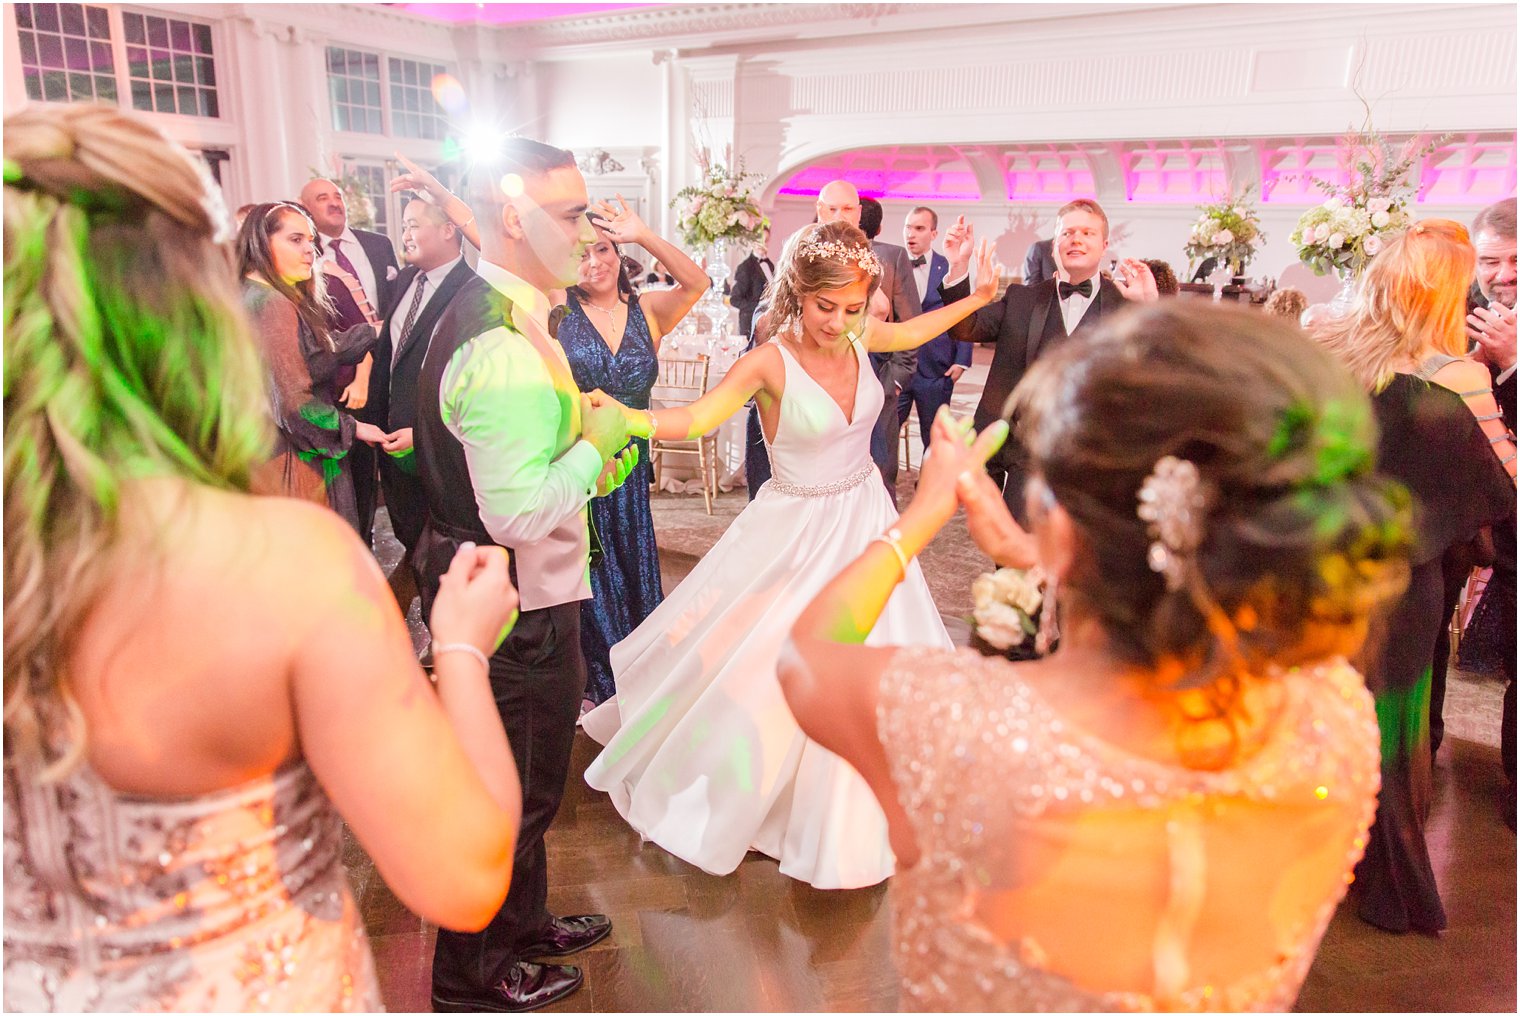 dancing at wedding reception | Park Chateau Wedding Photography